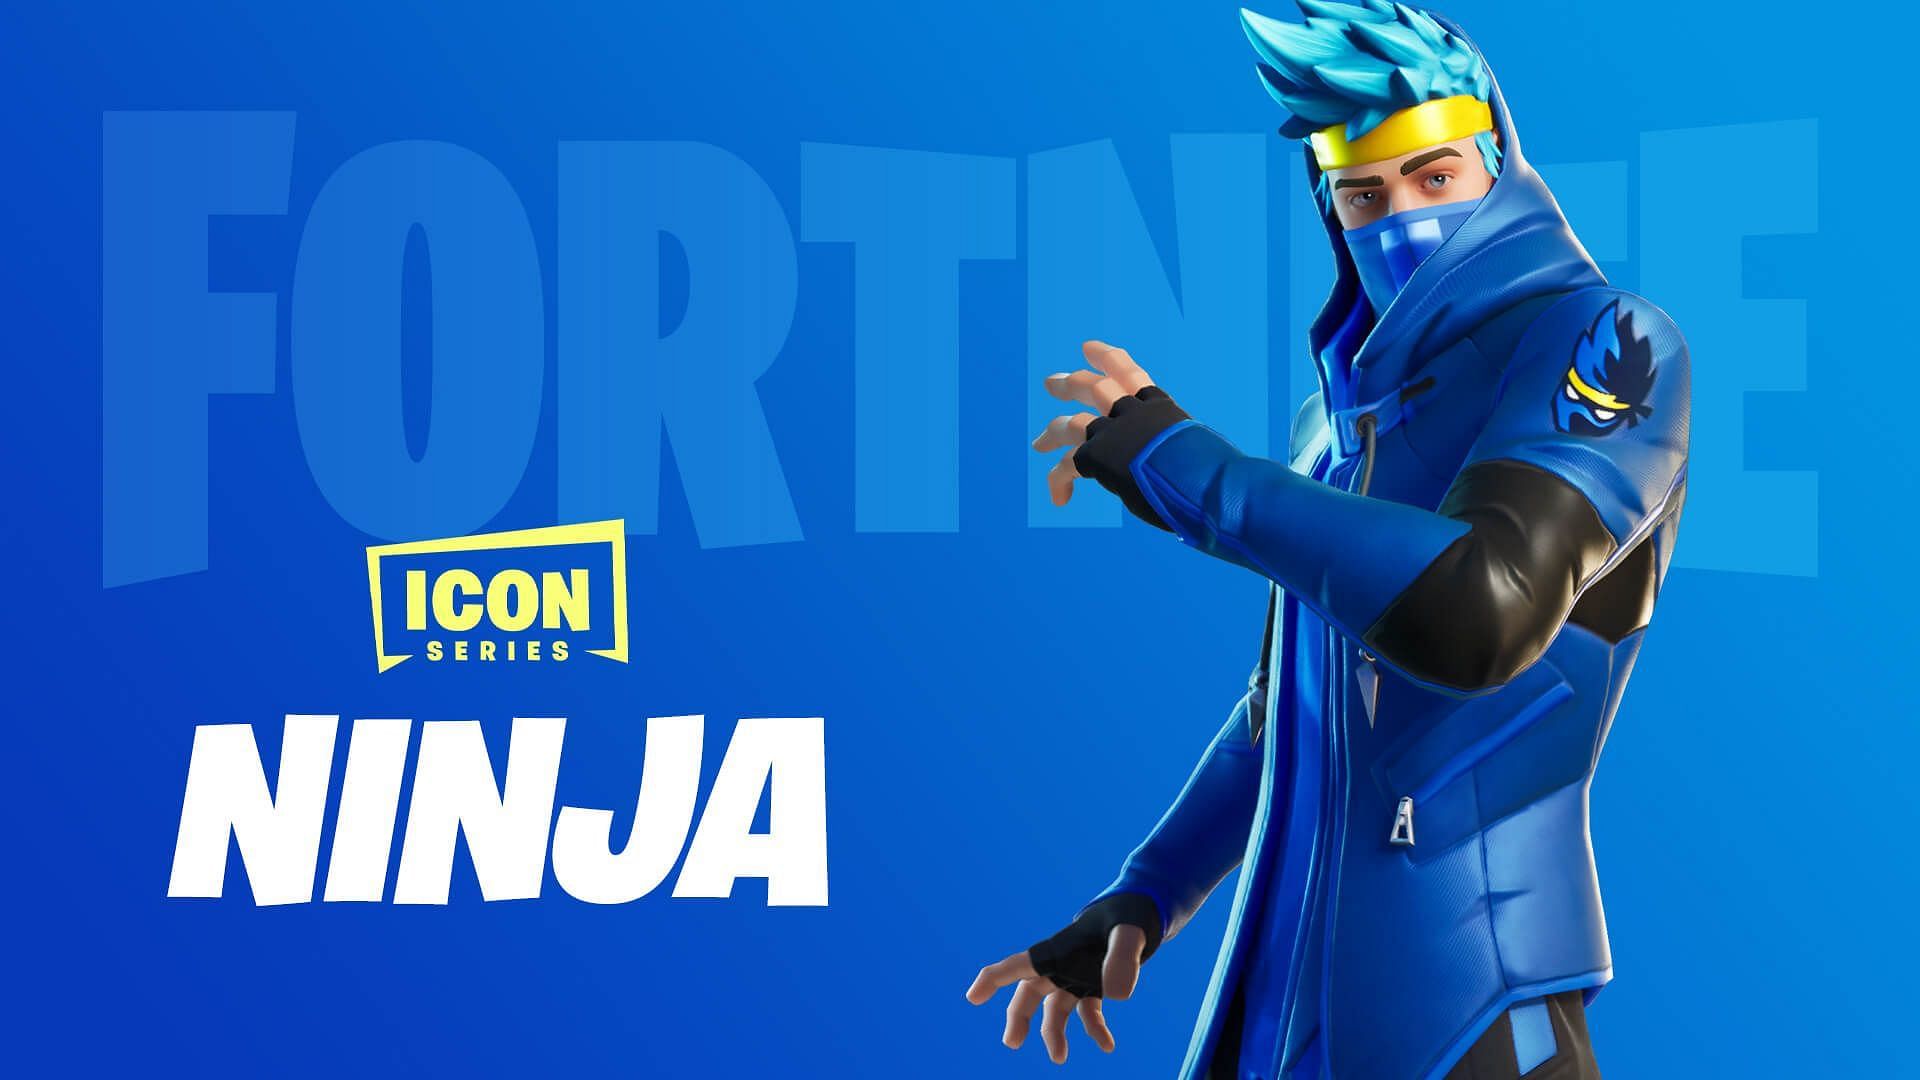 Fortnite and Ninja have a strong relationship (Image via Epic Games)